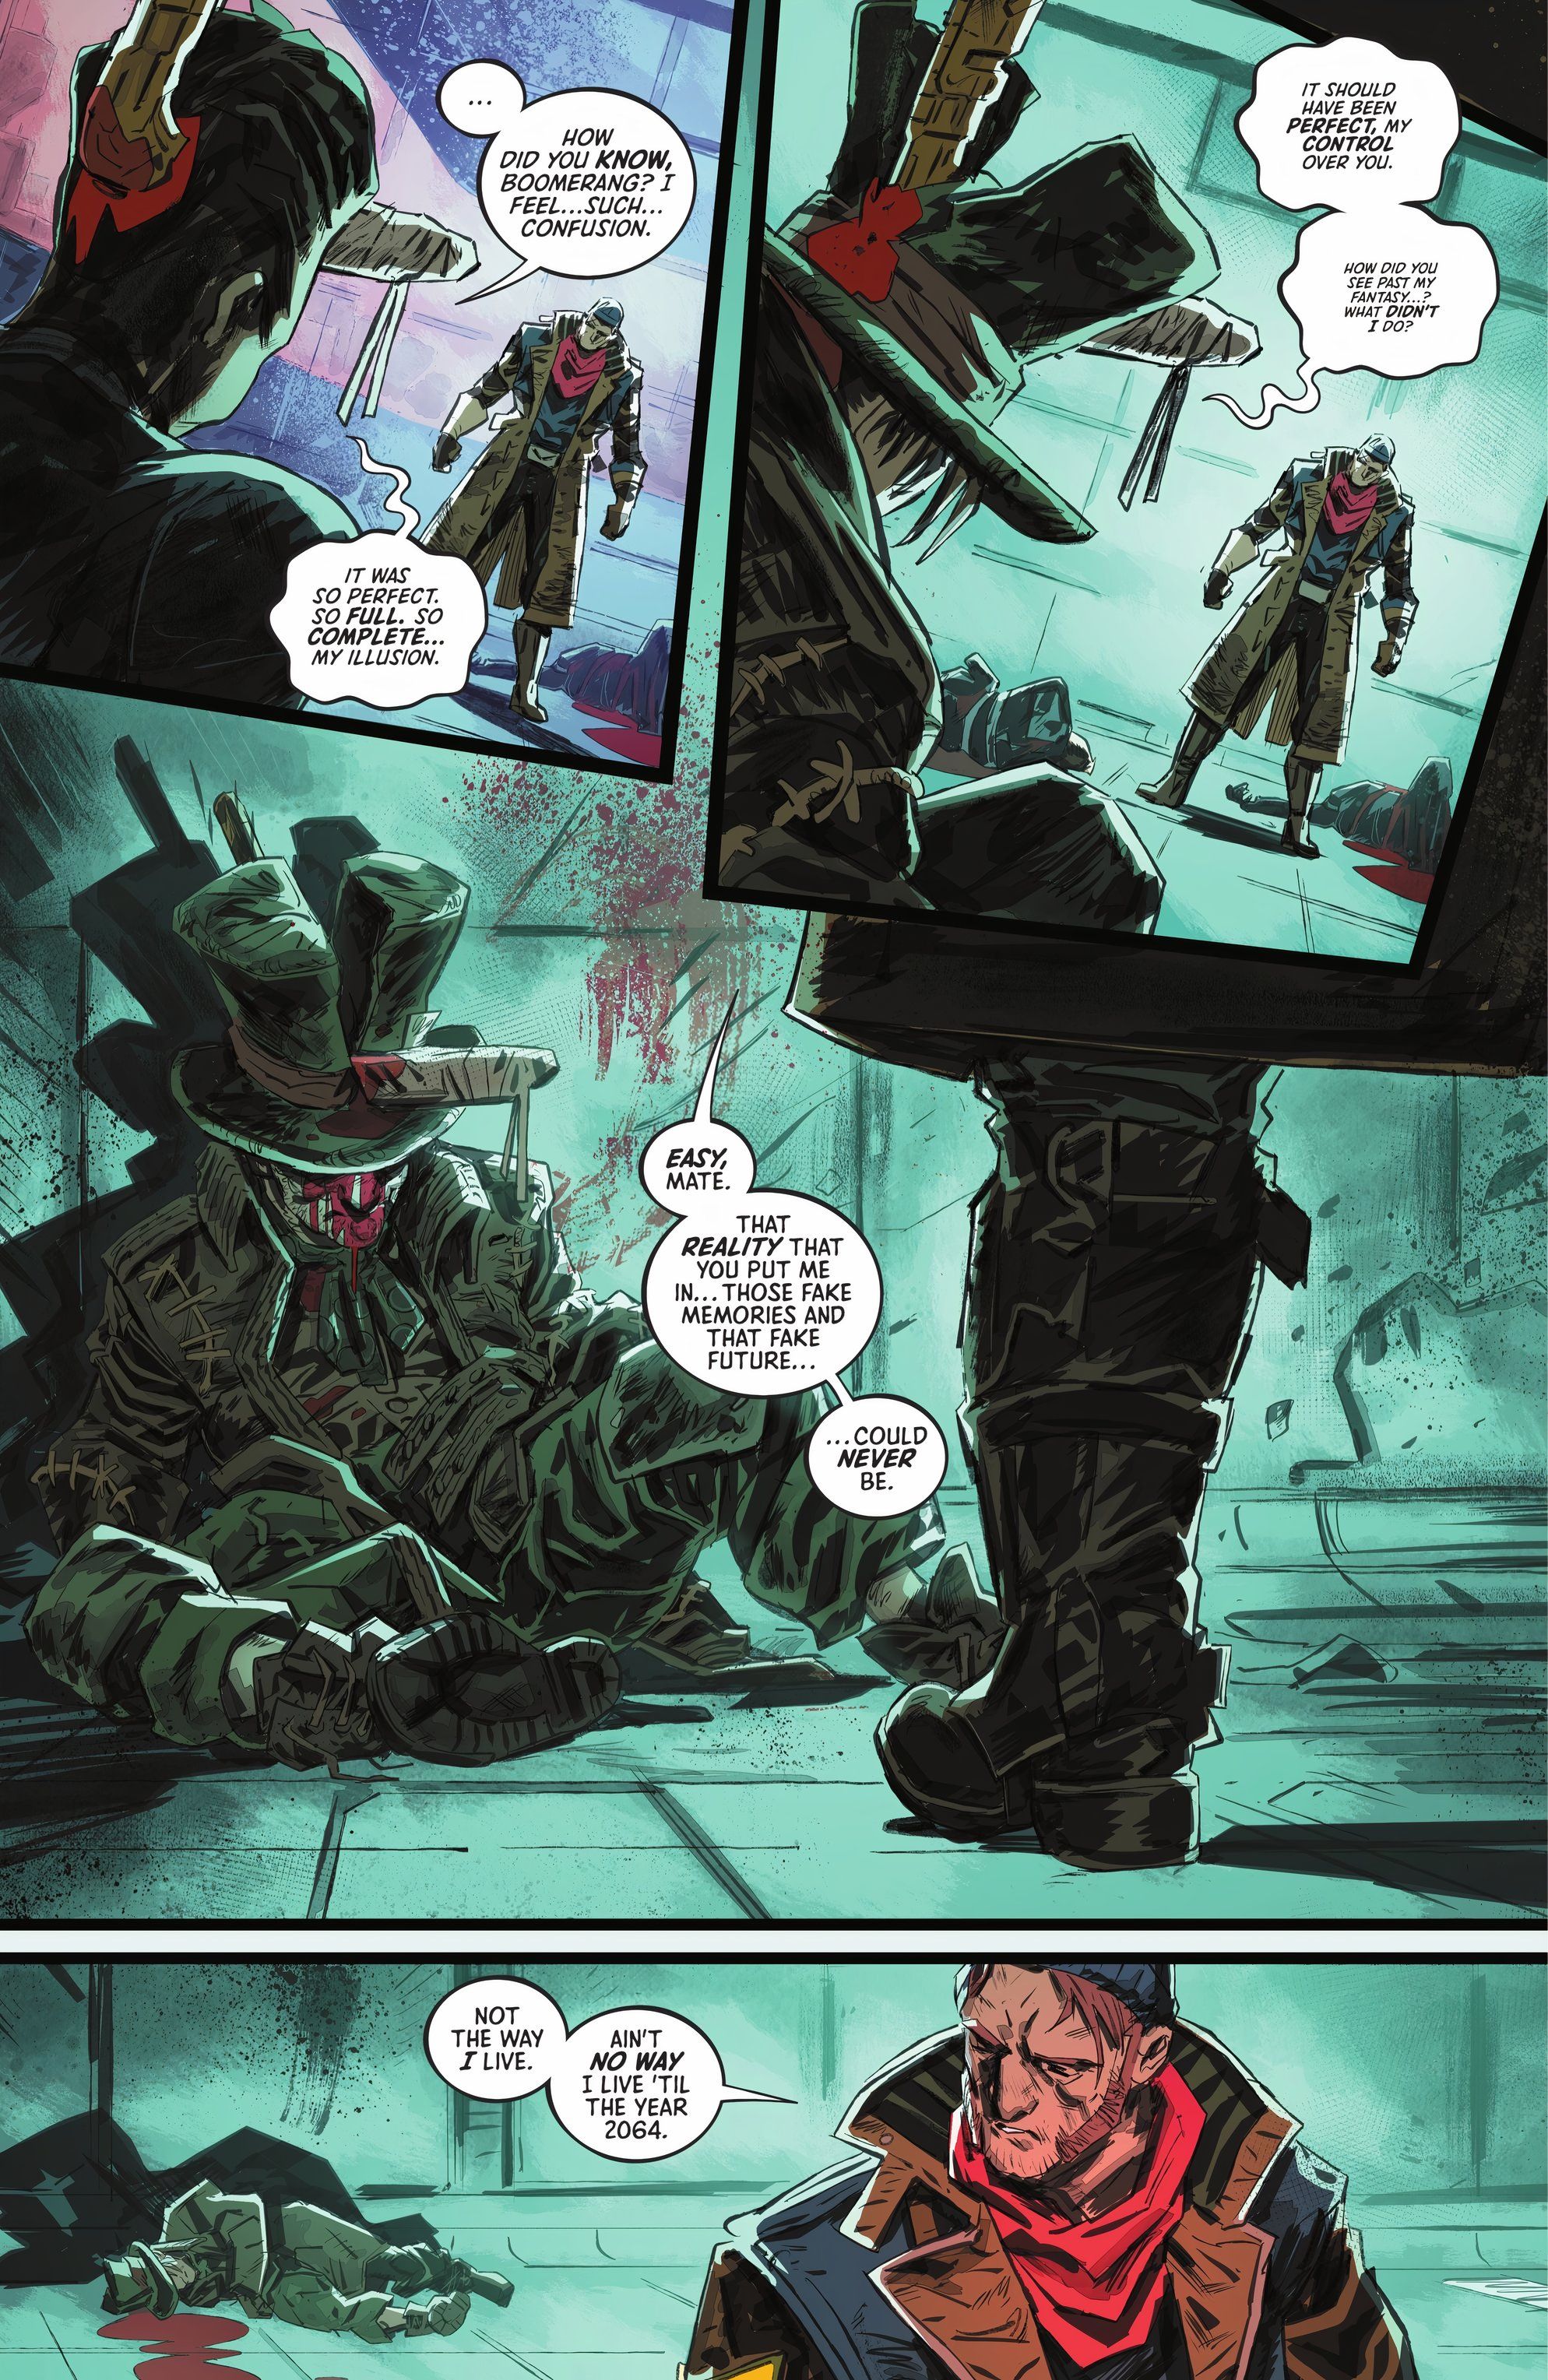 Suicide Squad Kill Arkham Asylum #4 featuring Captain Boomerang killing Mad Hatter